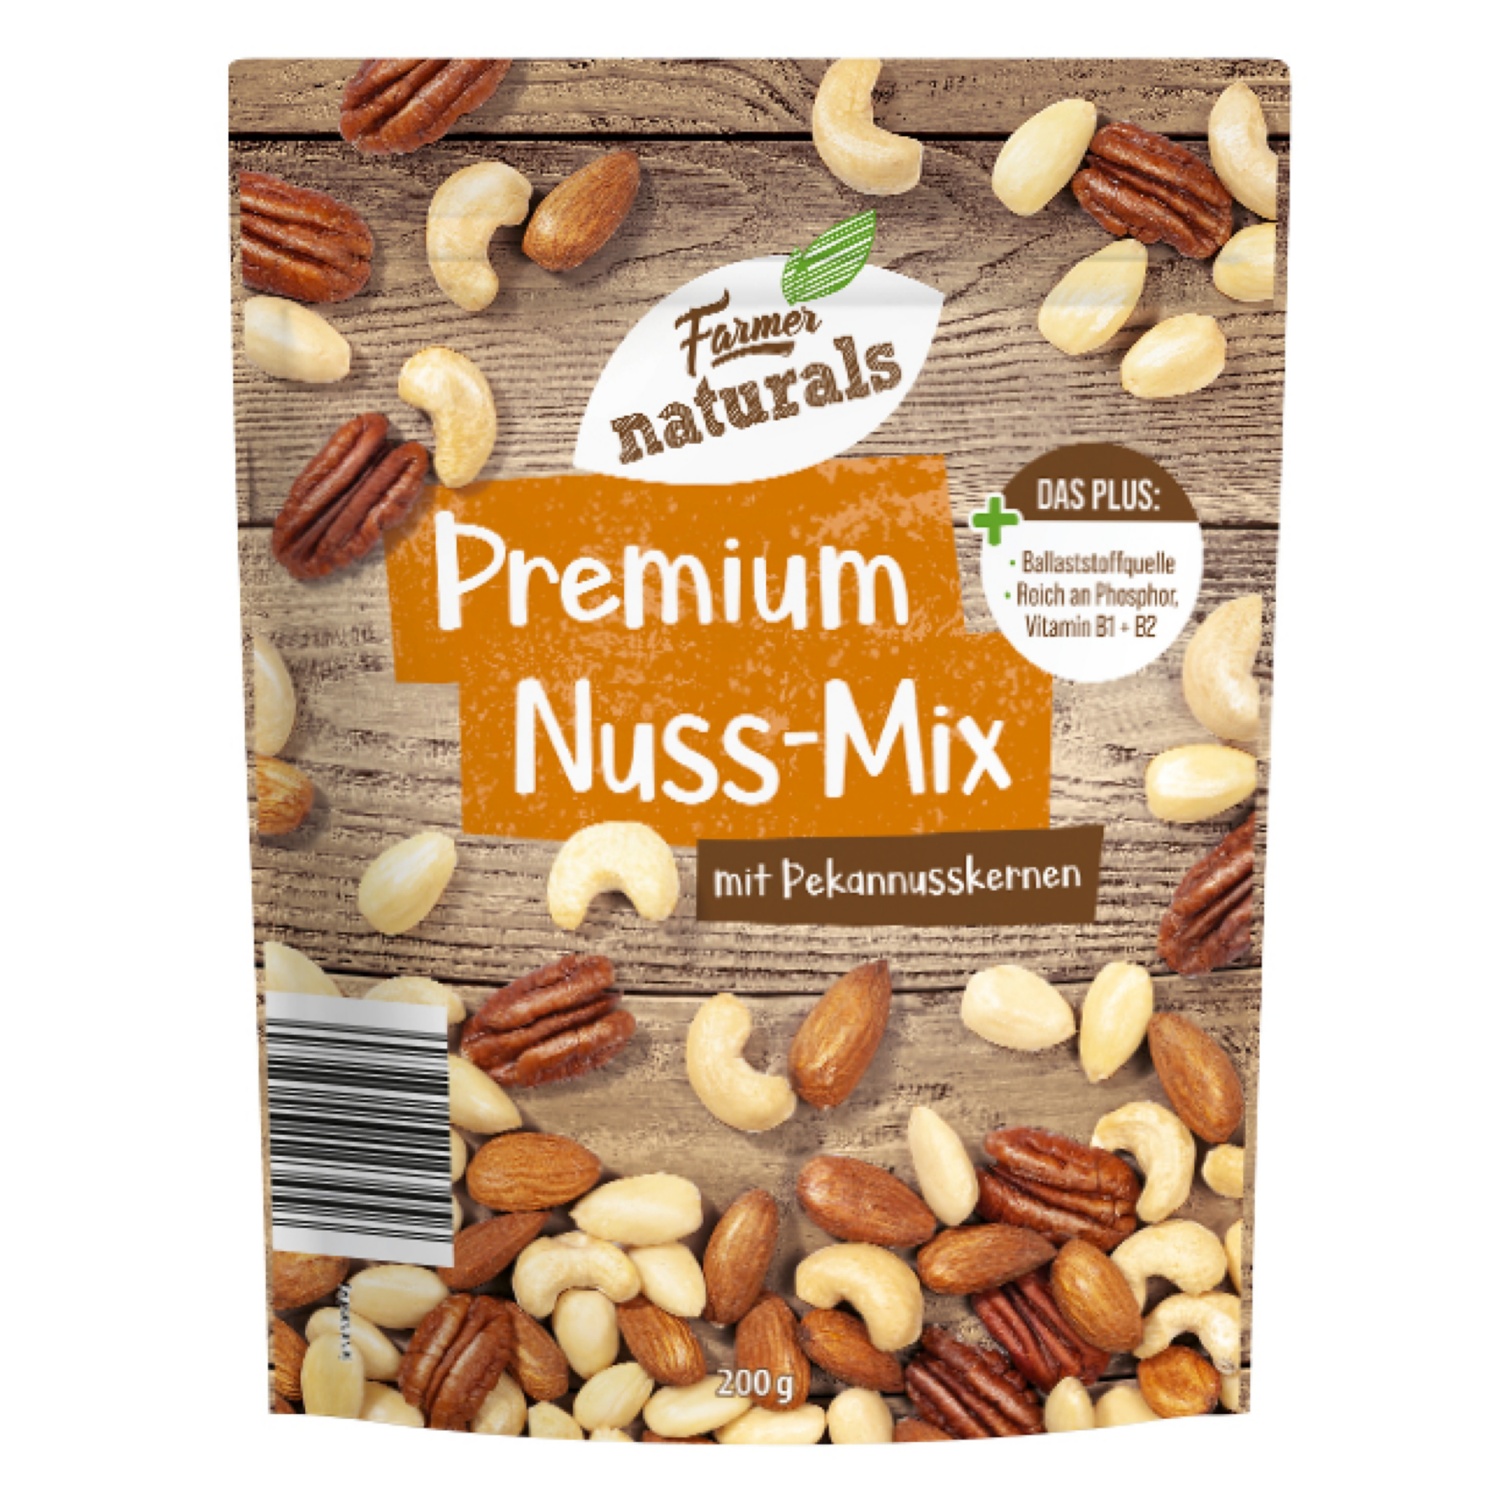 Farmer naturals Premium Nuss-Mix 200 g